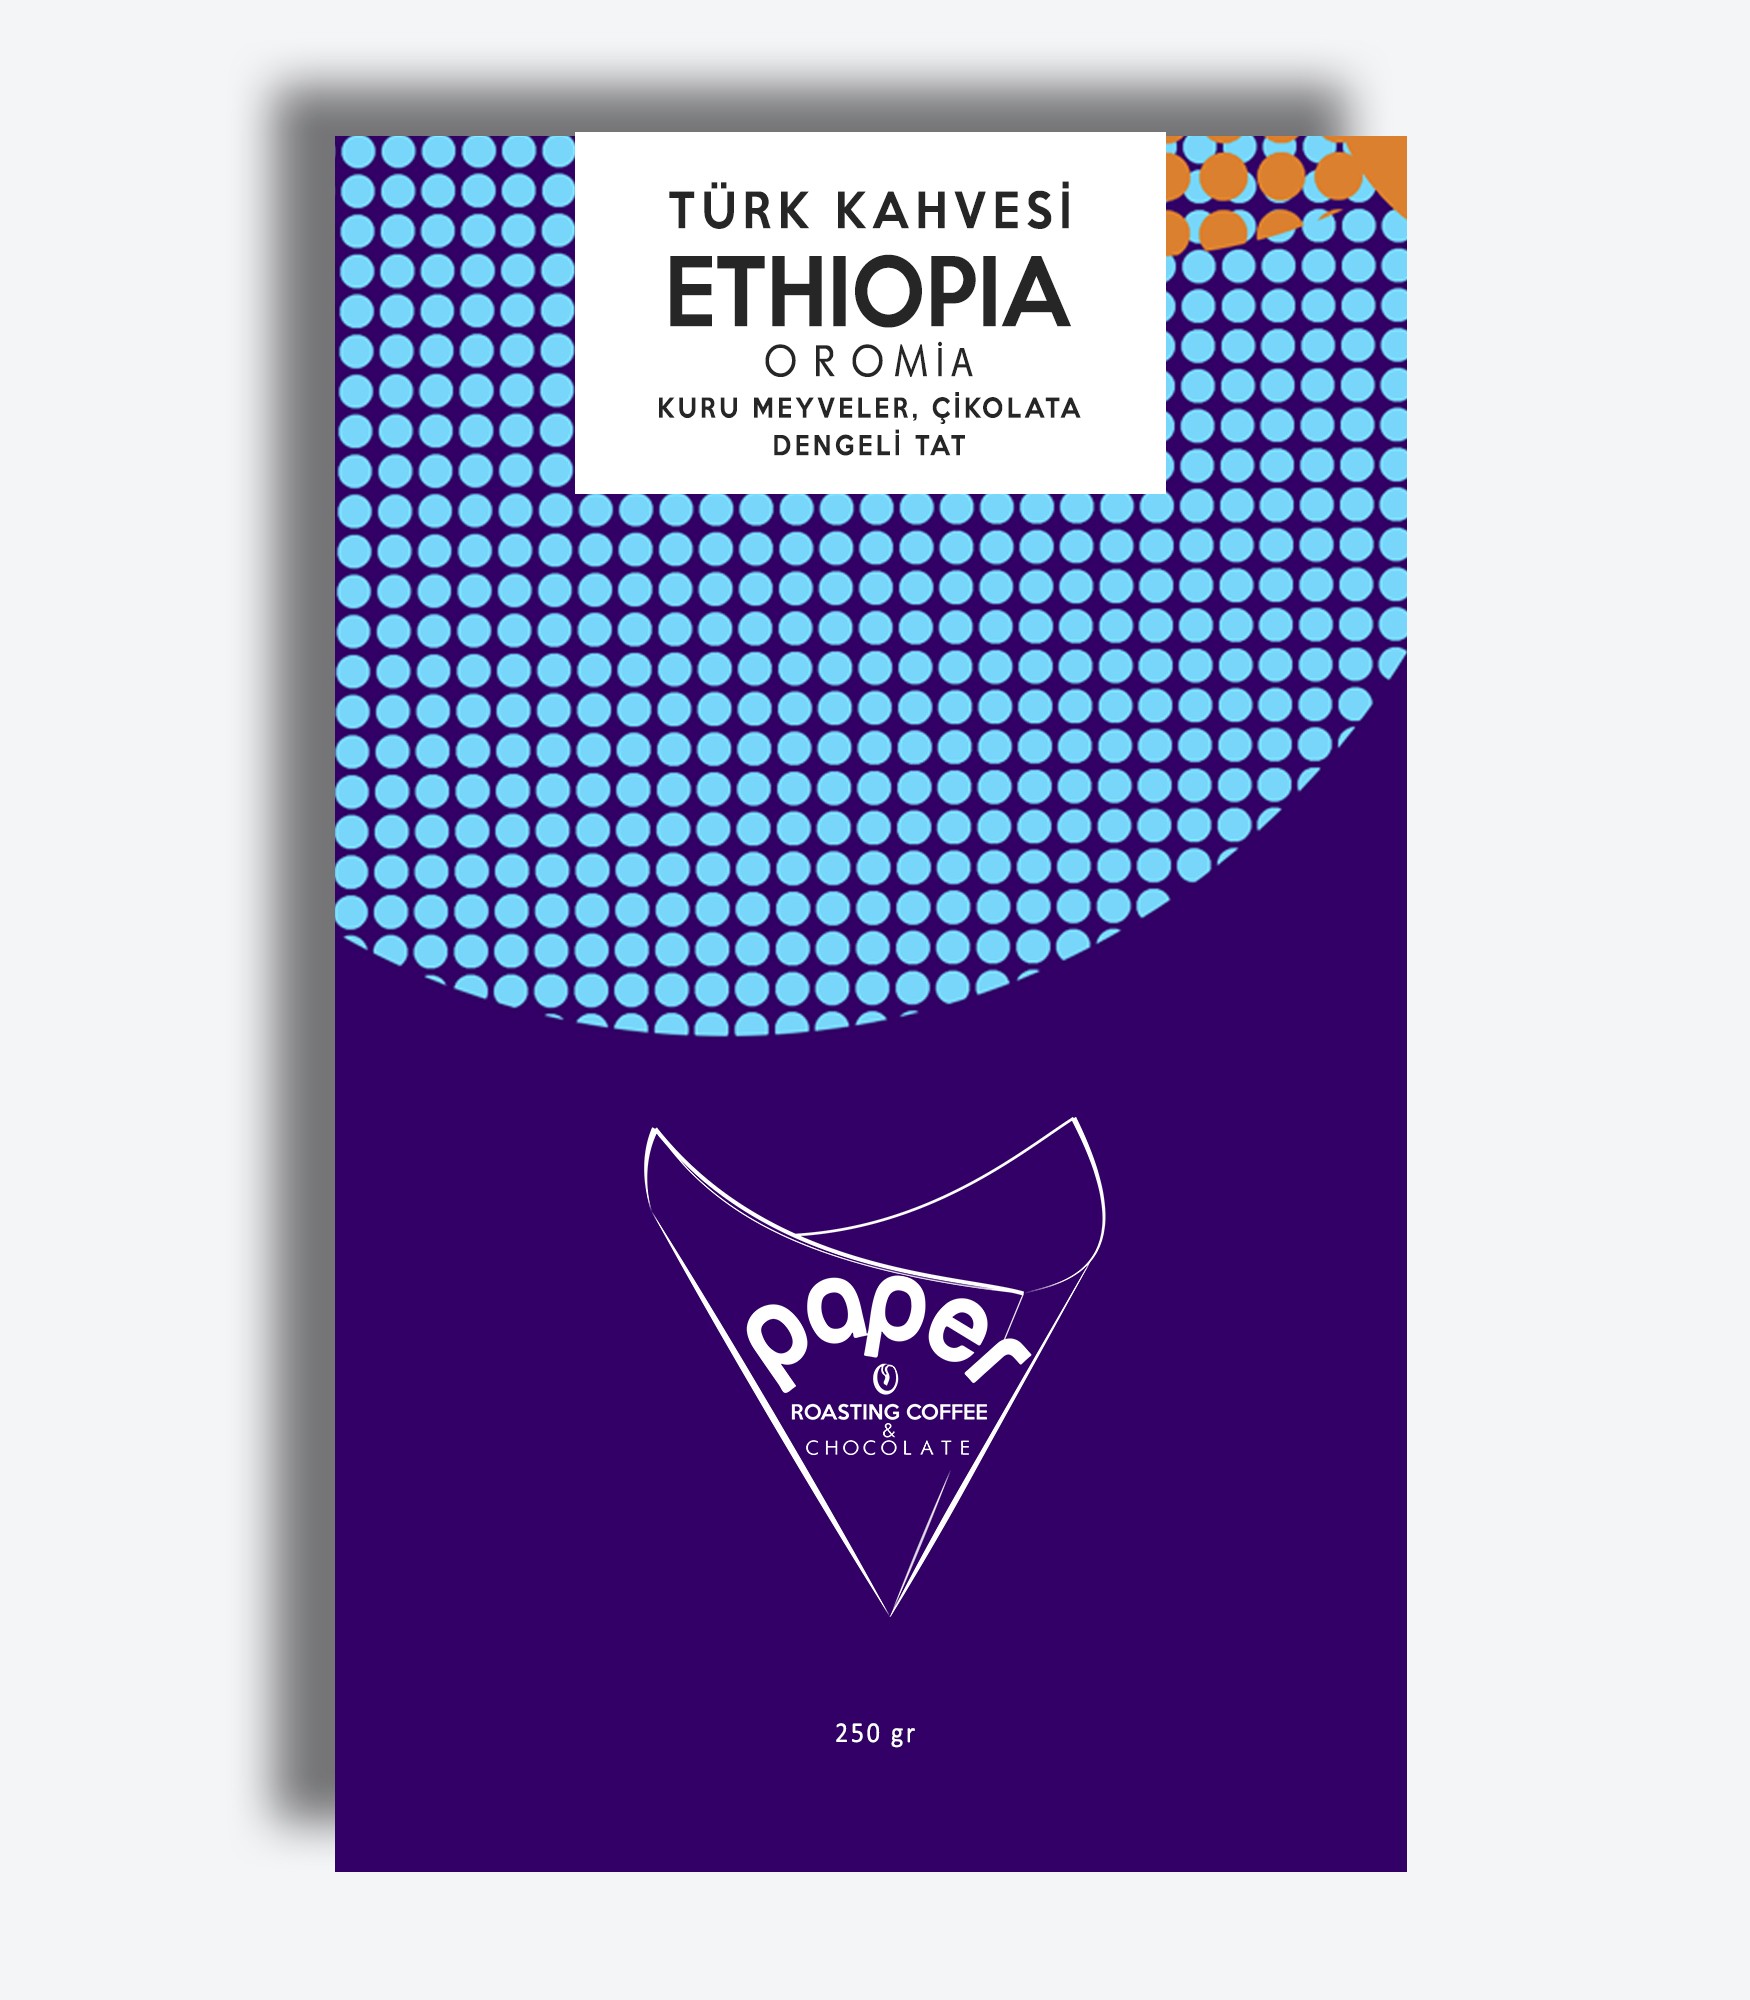 Türk Kahvesi Ethiopia Oromia